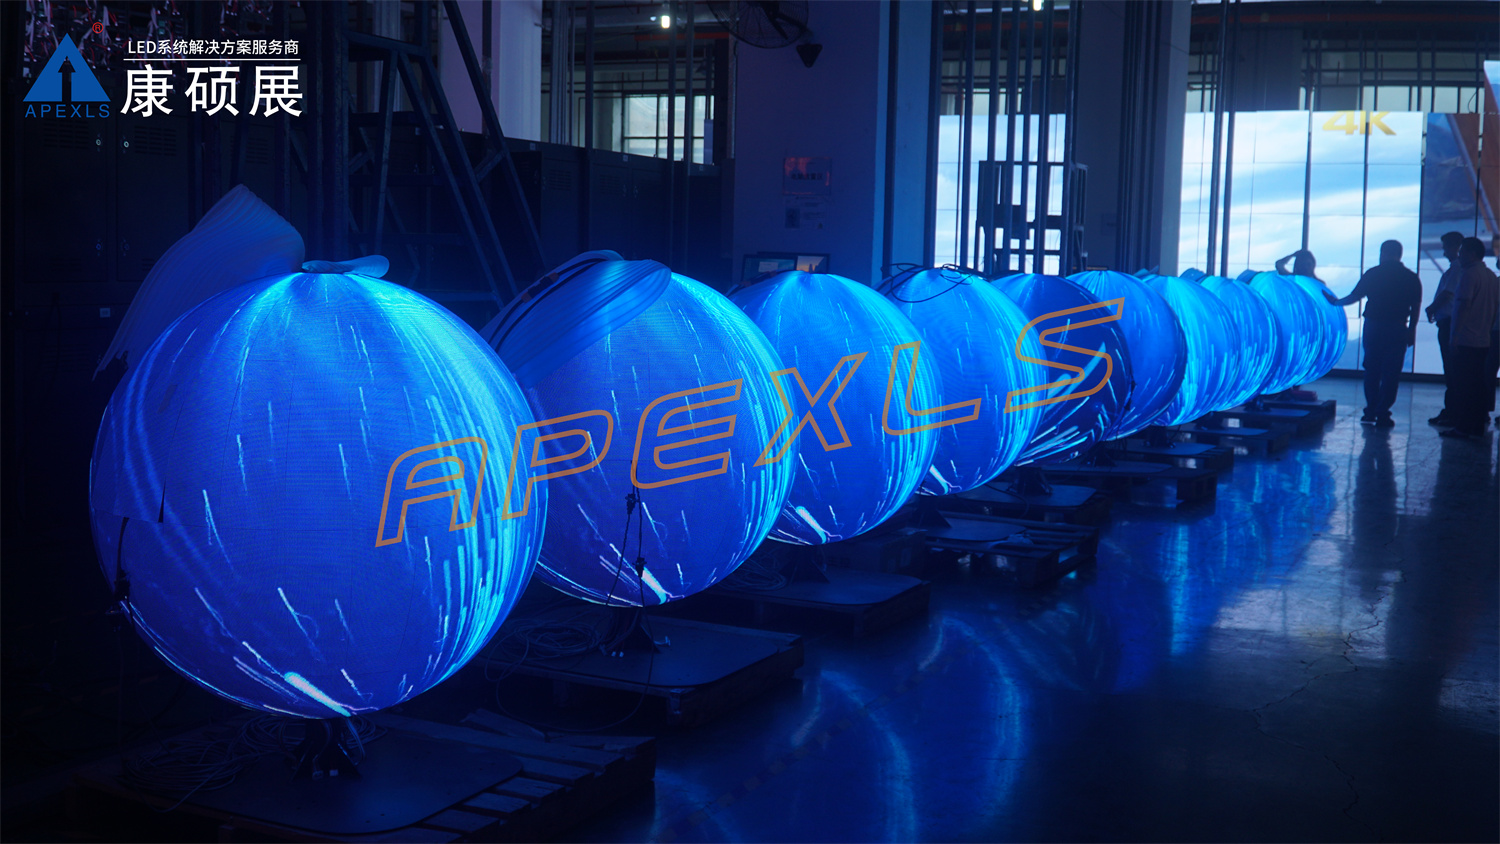 LED球形屏外贸出口